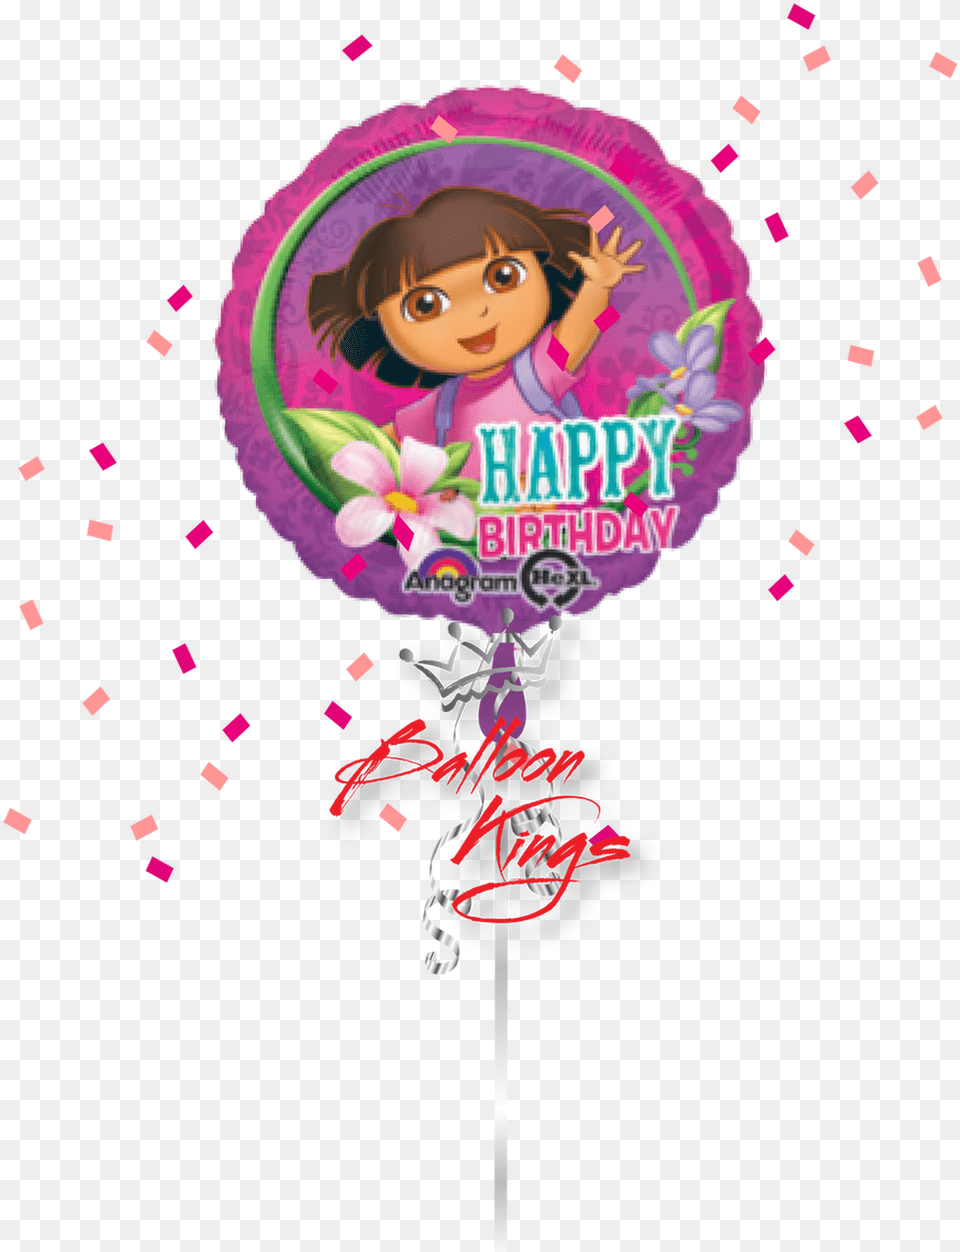 Dora The Explorer Round 5th Happy Birthday Cartoon Dora, Food, Sweets, Candy, Balloon Free Transparent Png